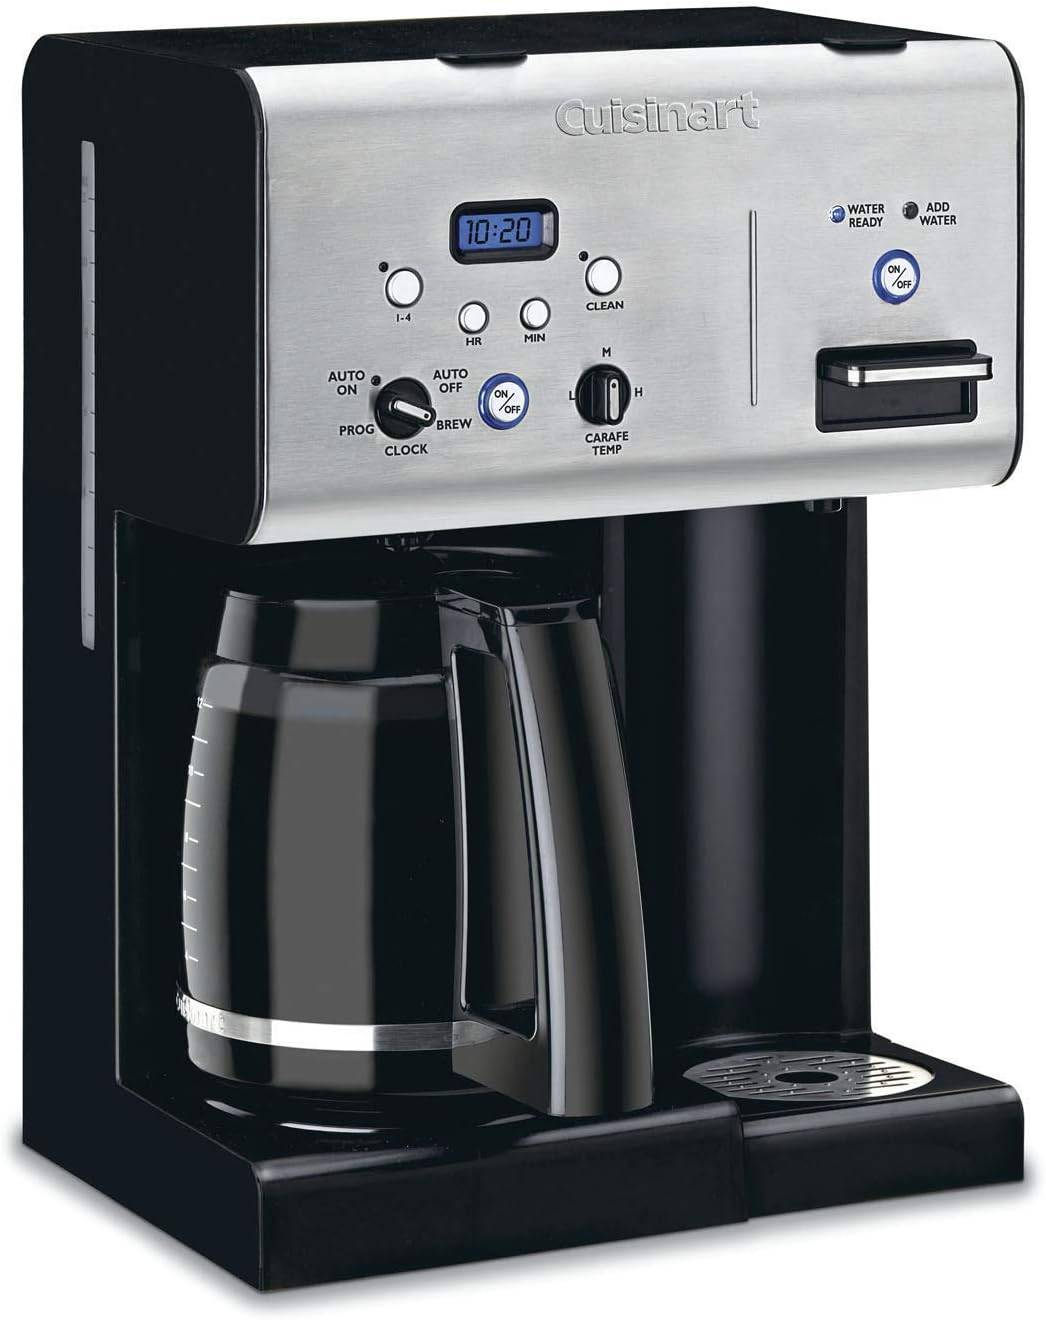 KitchenAid KCM1202OB Coffee Maker Review - Consumer Reports